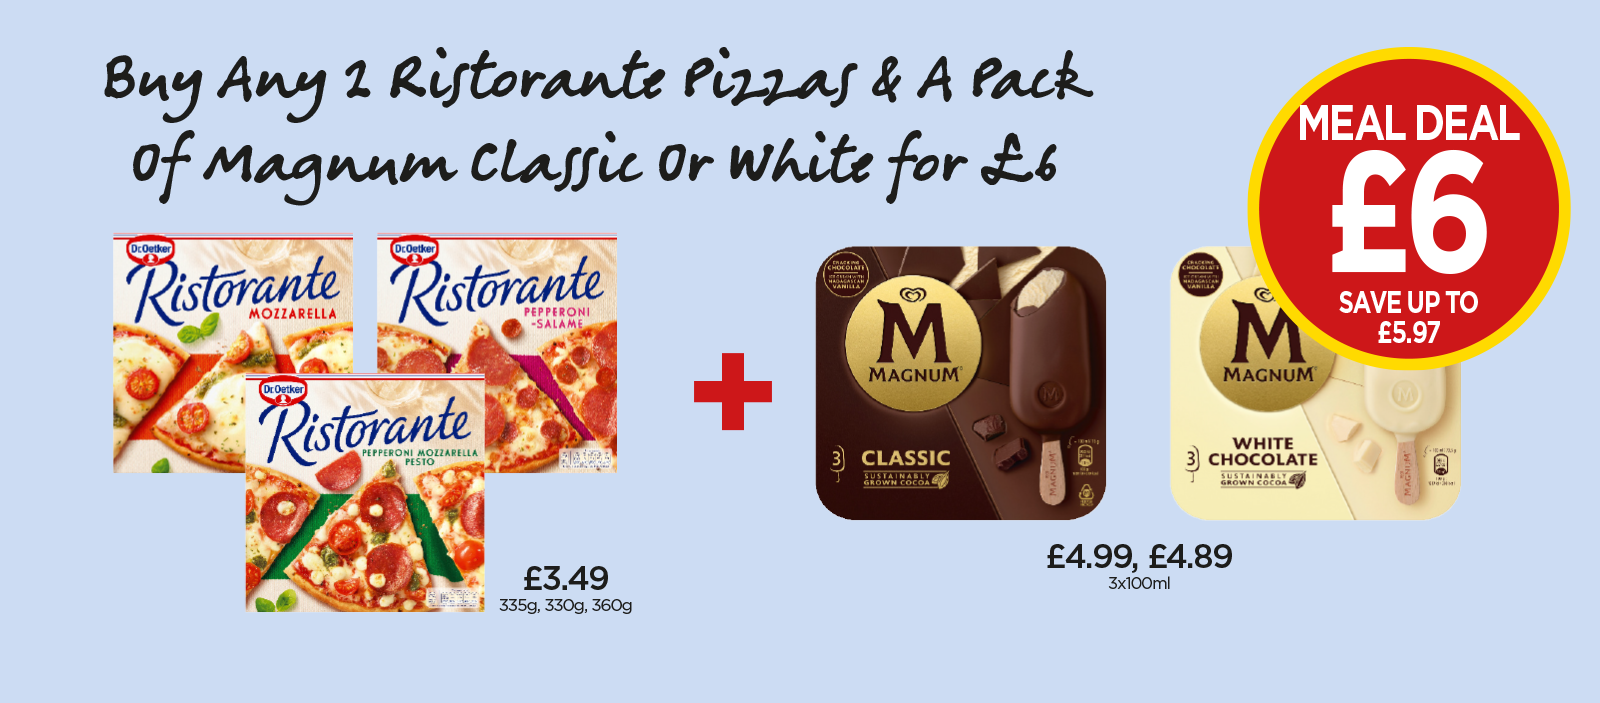 Ristorante Mozzarella, Pepperoni-Salame, Magnum Classic - Buy Any 2 Ristorante Pizzas & a Pack of Magnum Classic or Magnum White for £6 at Budgens